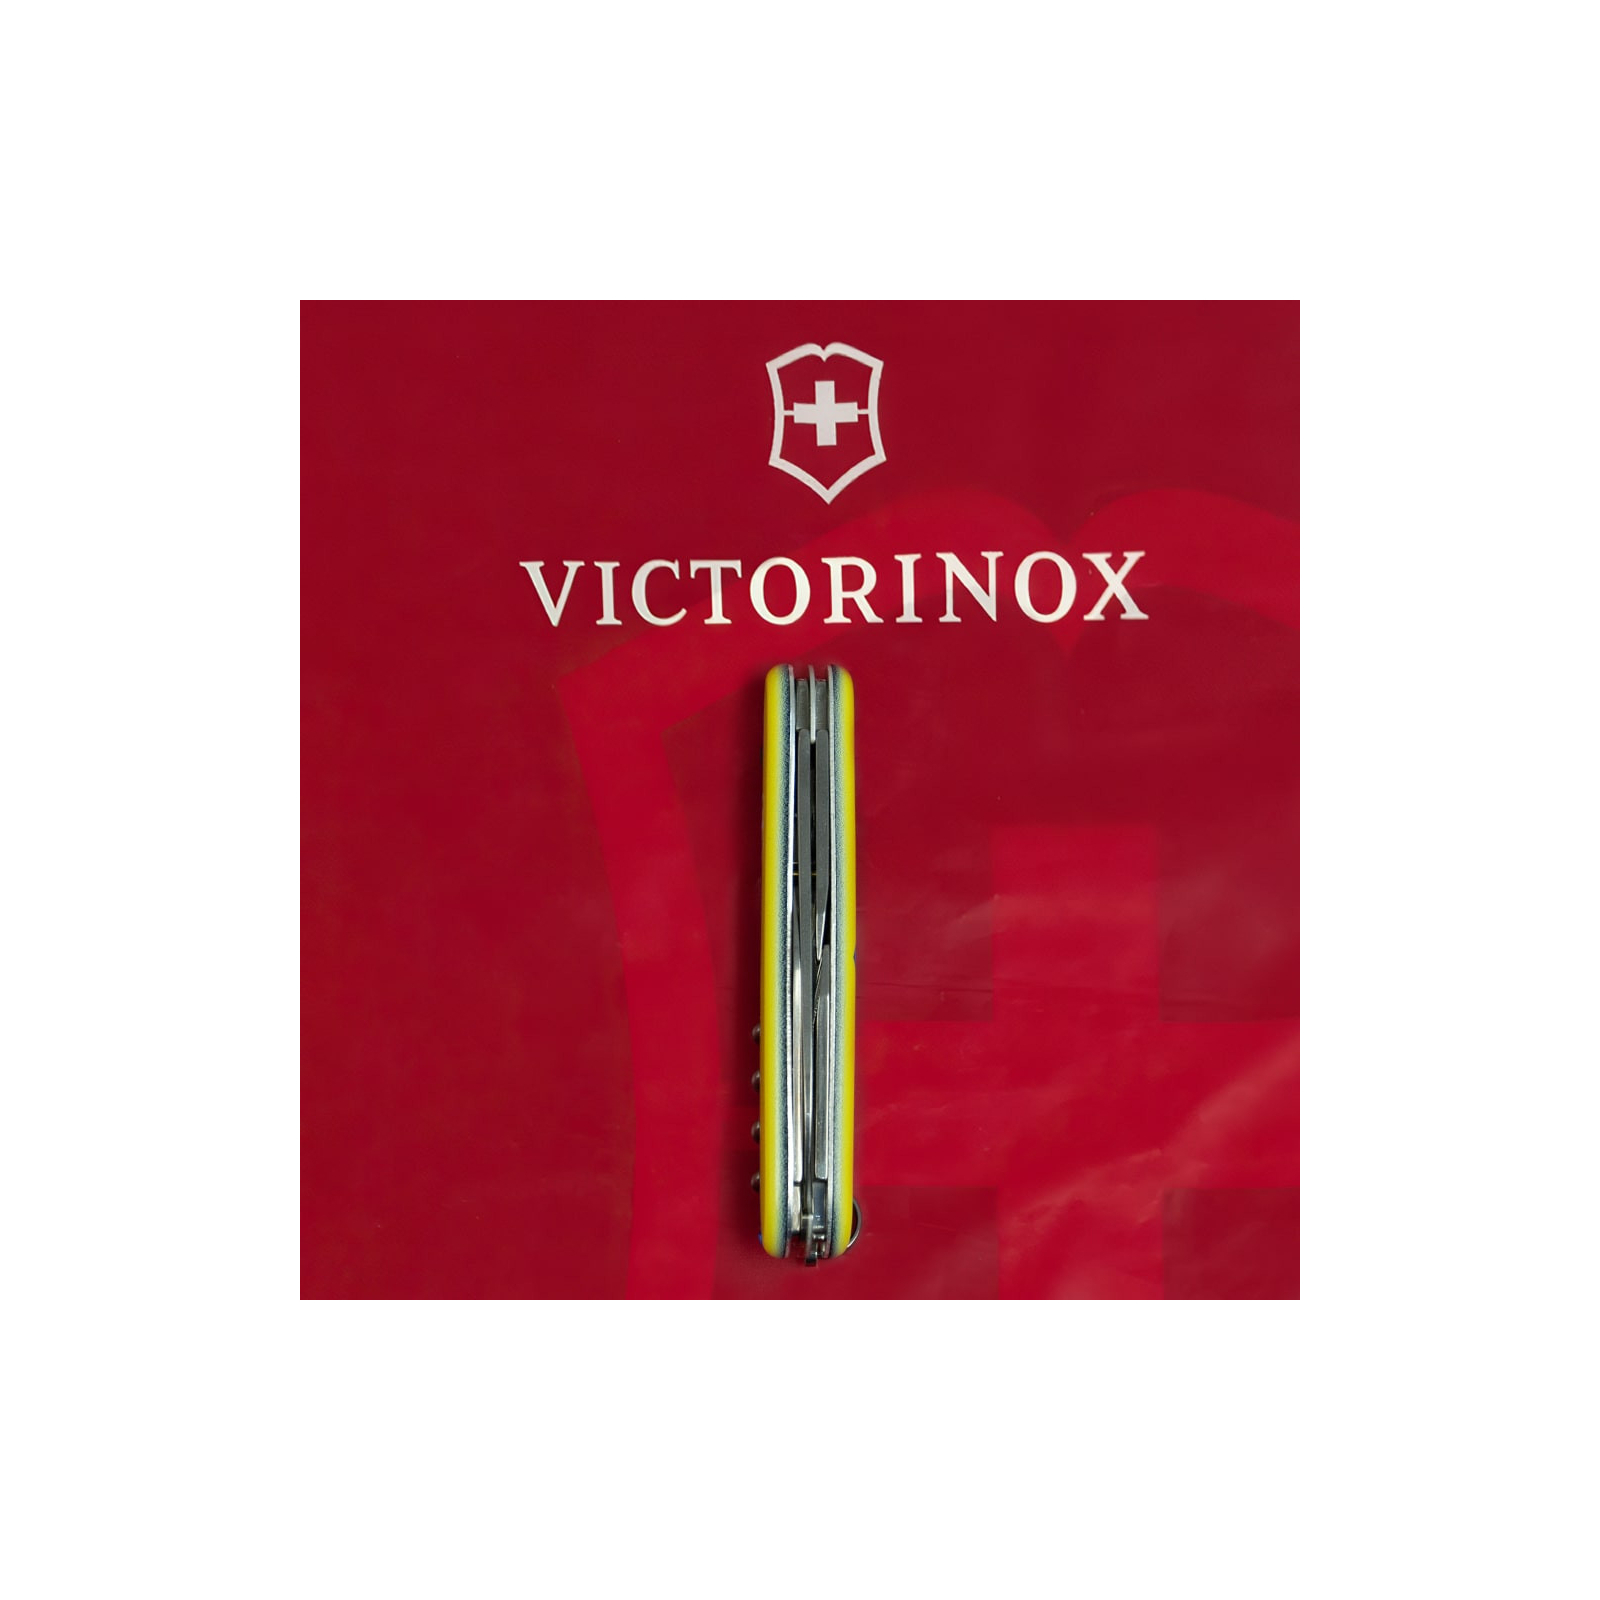 Нож Victorinox Spartan Ukraine 91 мм Жовто-синій малюнок (1.3603.7_T3100p) изображение 7